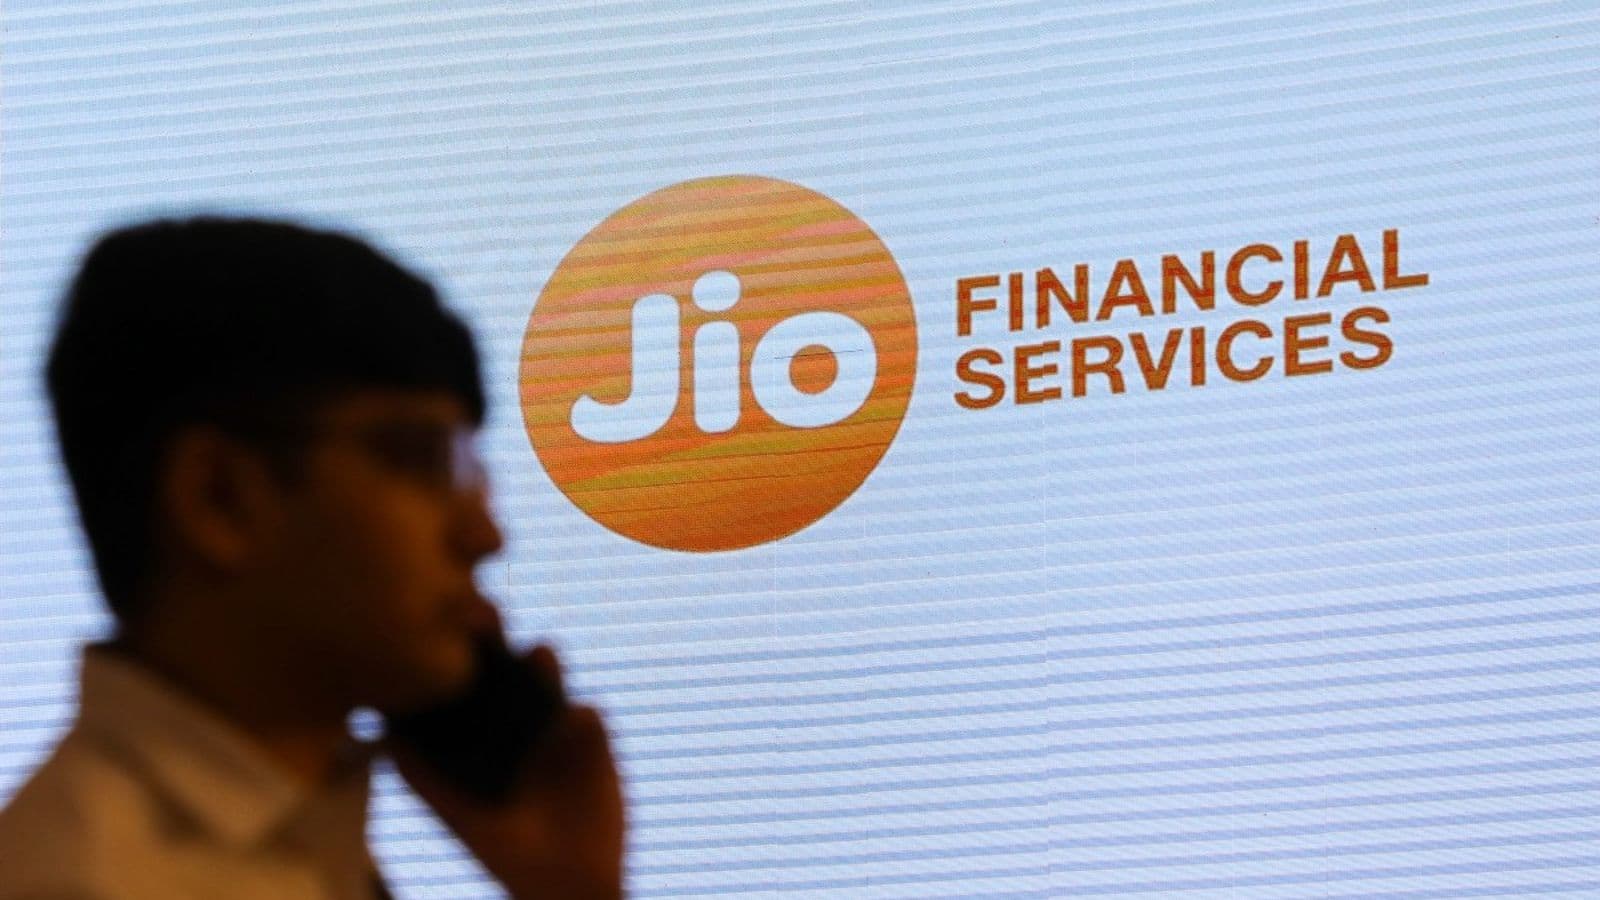 Jio Financial Services subsidiary announces $4.32 billion telecom equipment purchase